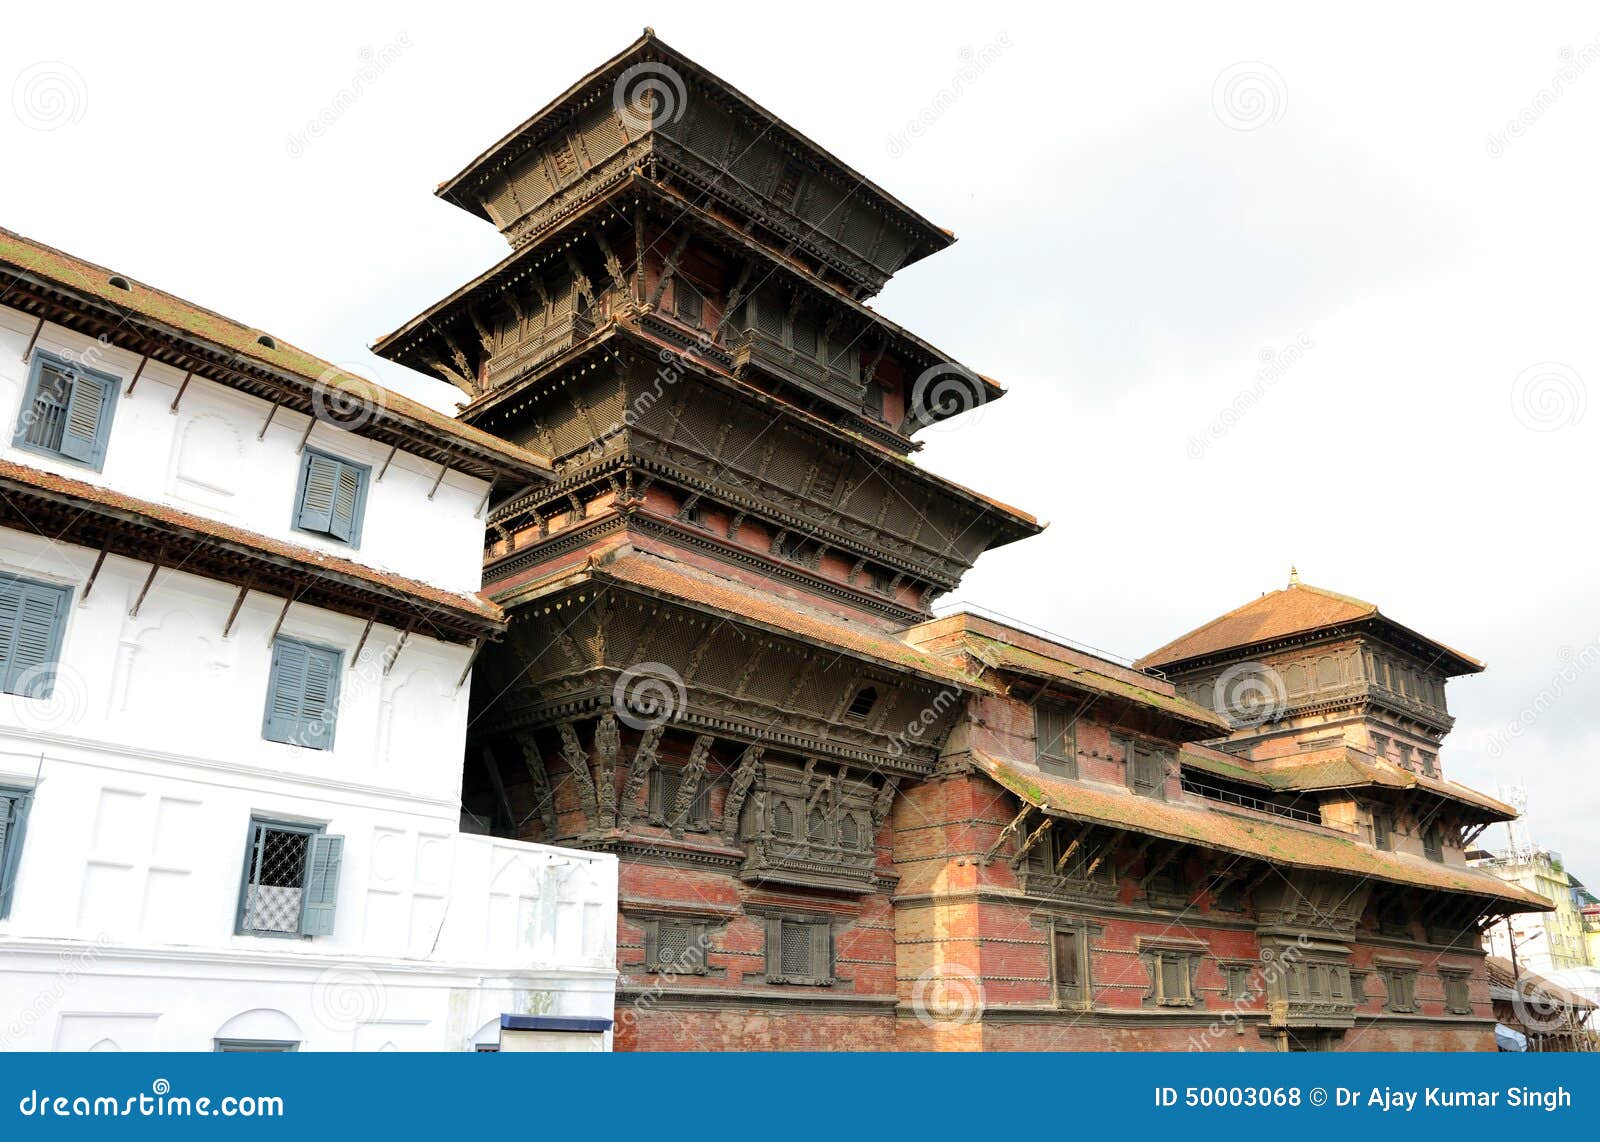 basantpur tower at hanuman dhoka durbar